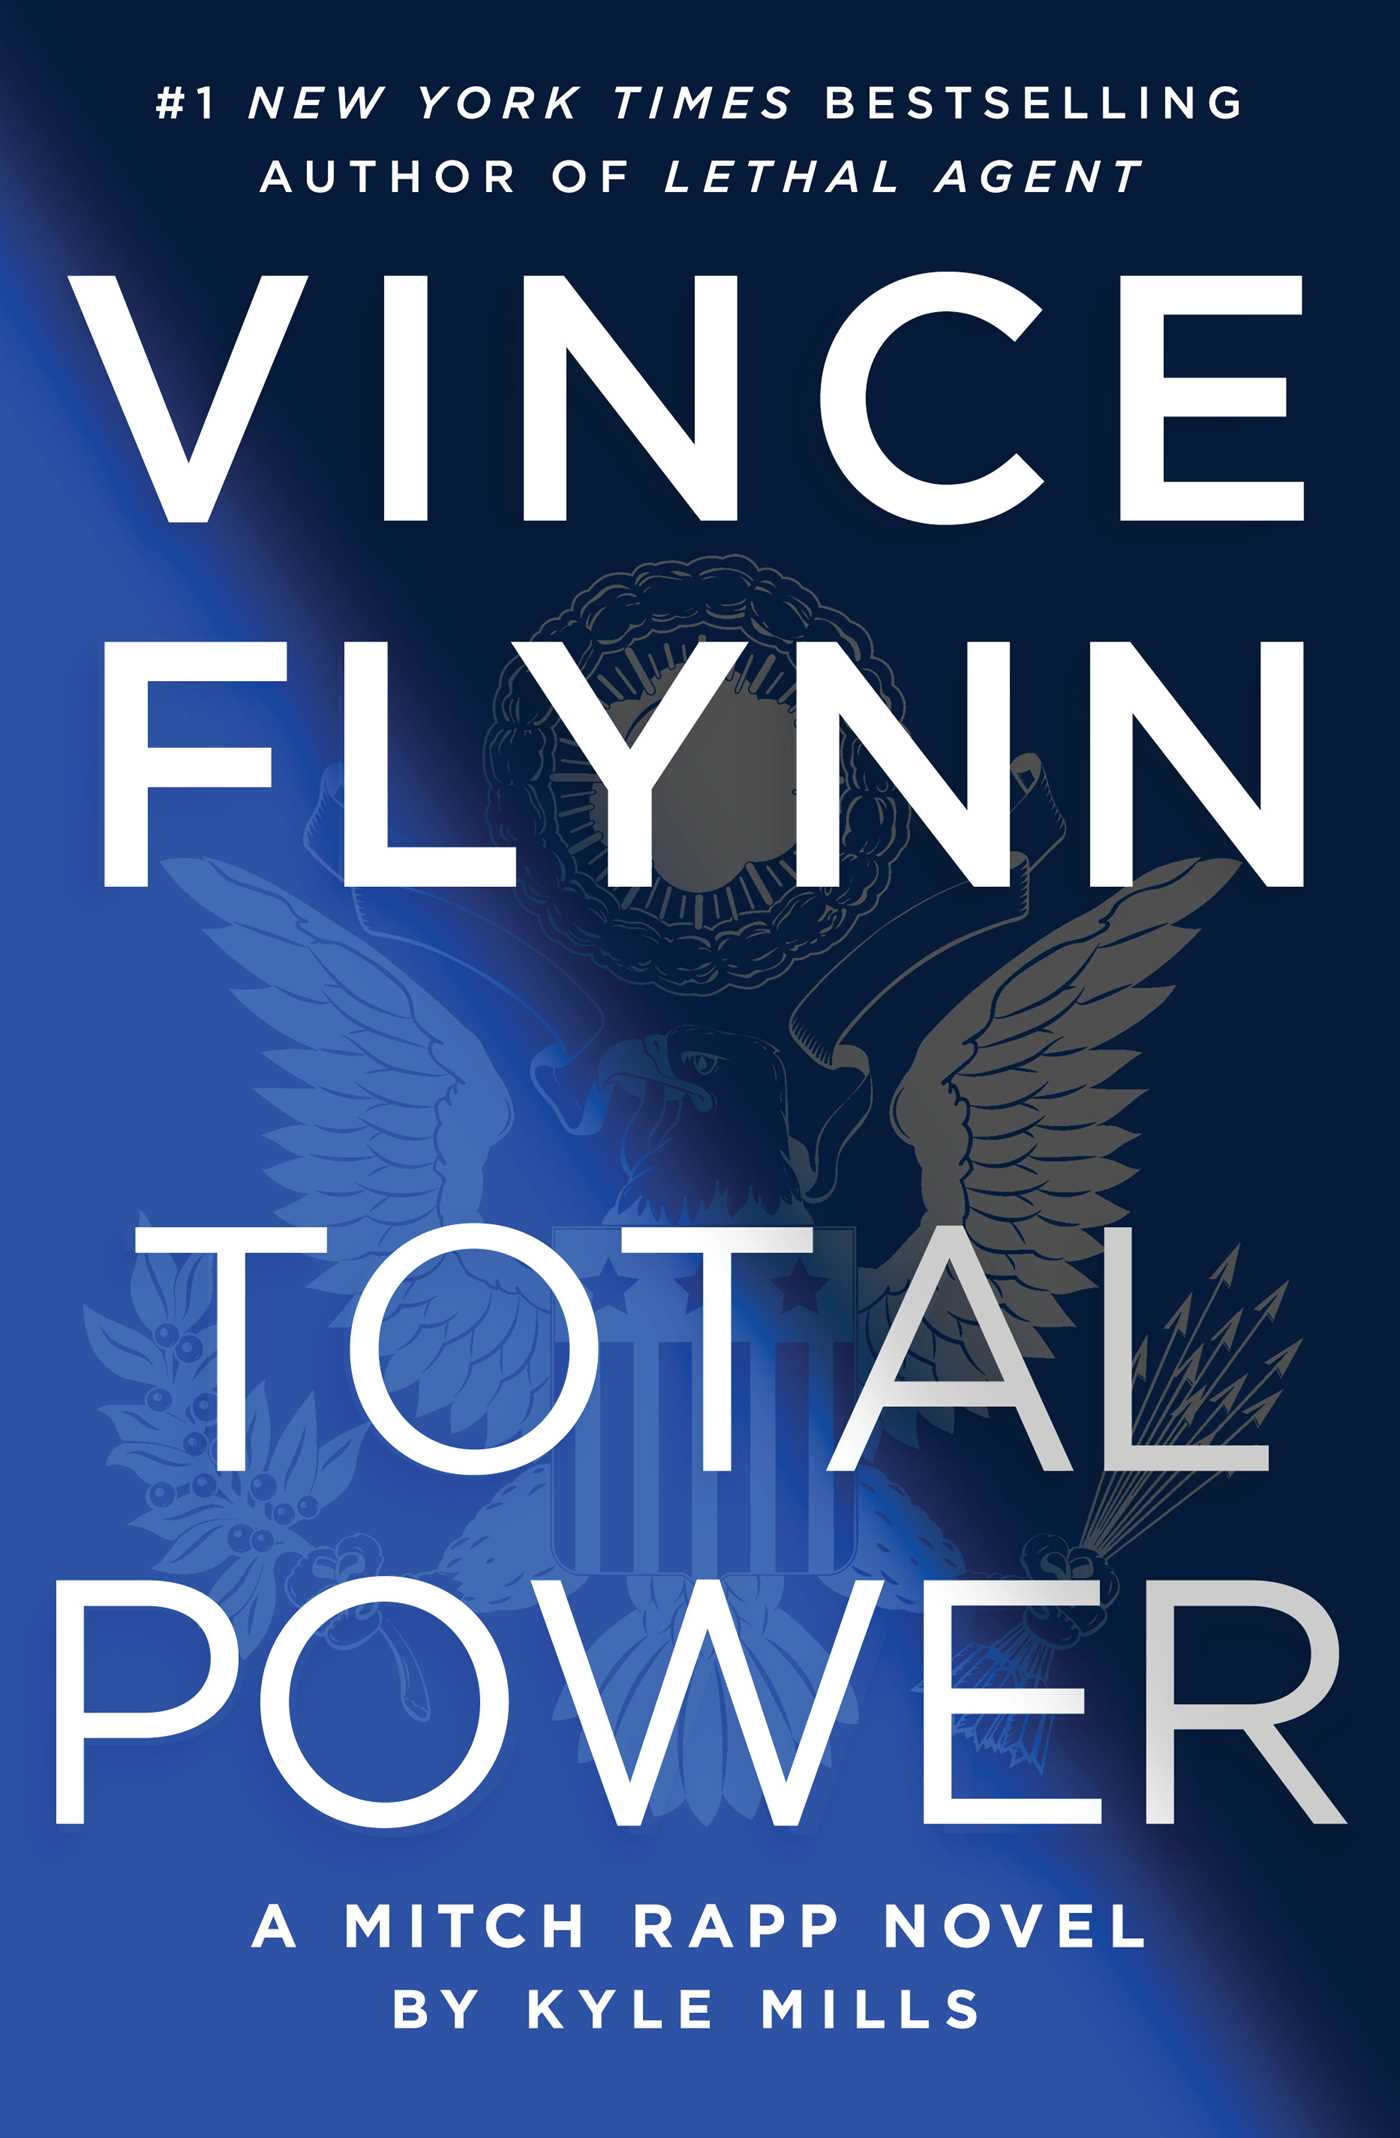 Total power : a Mitch Rapp novel